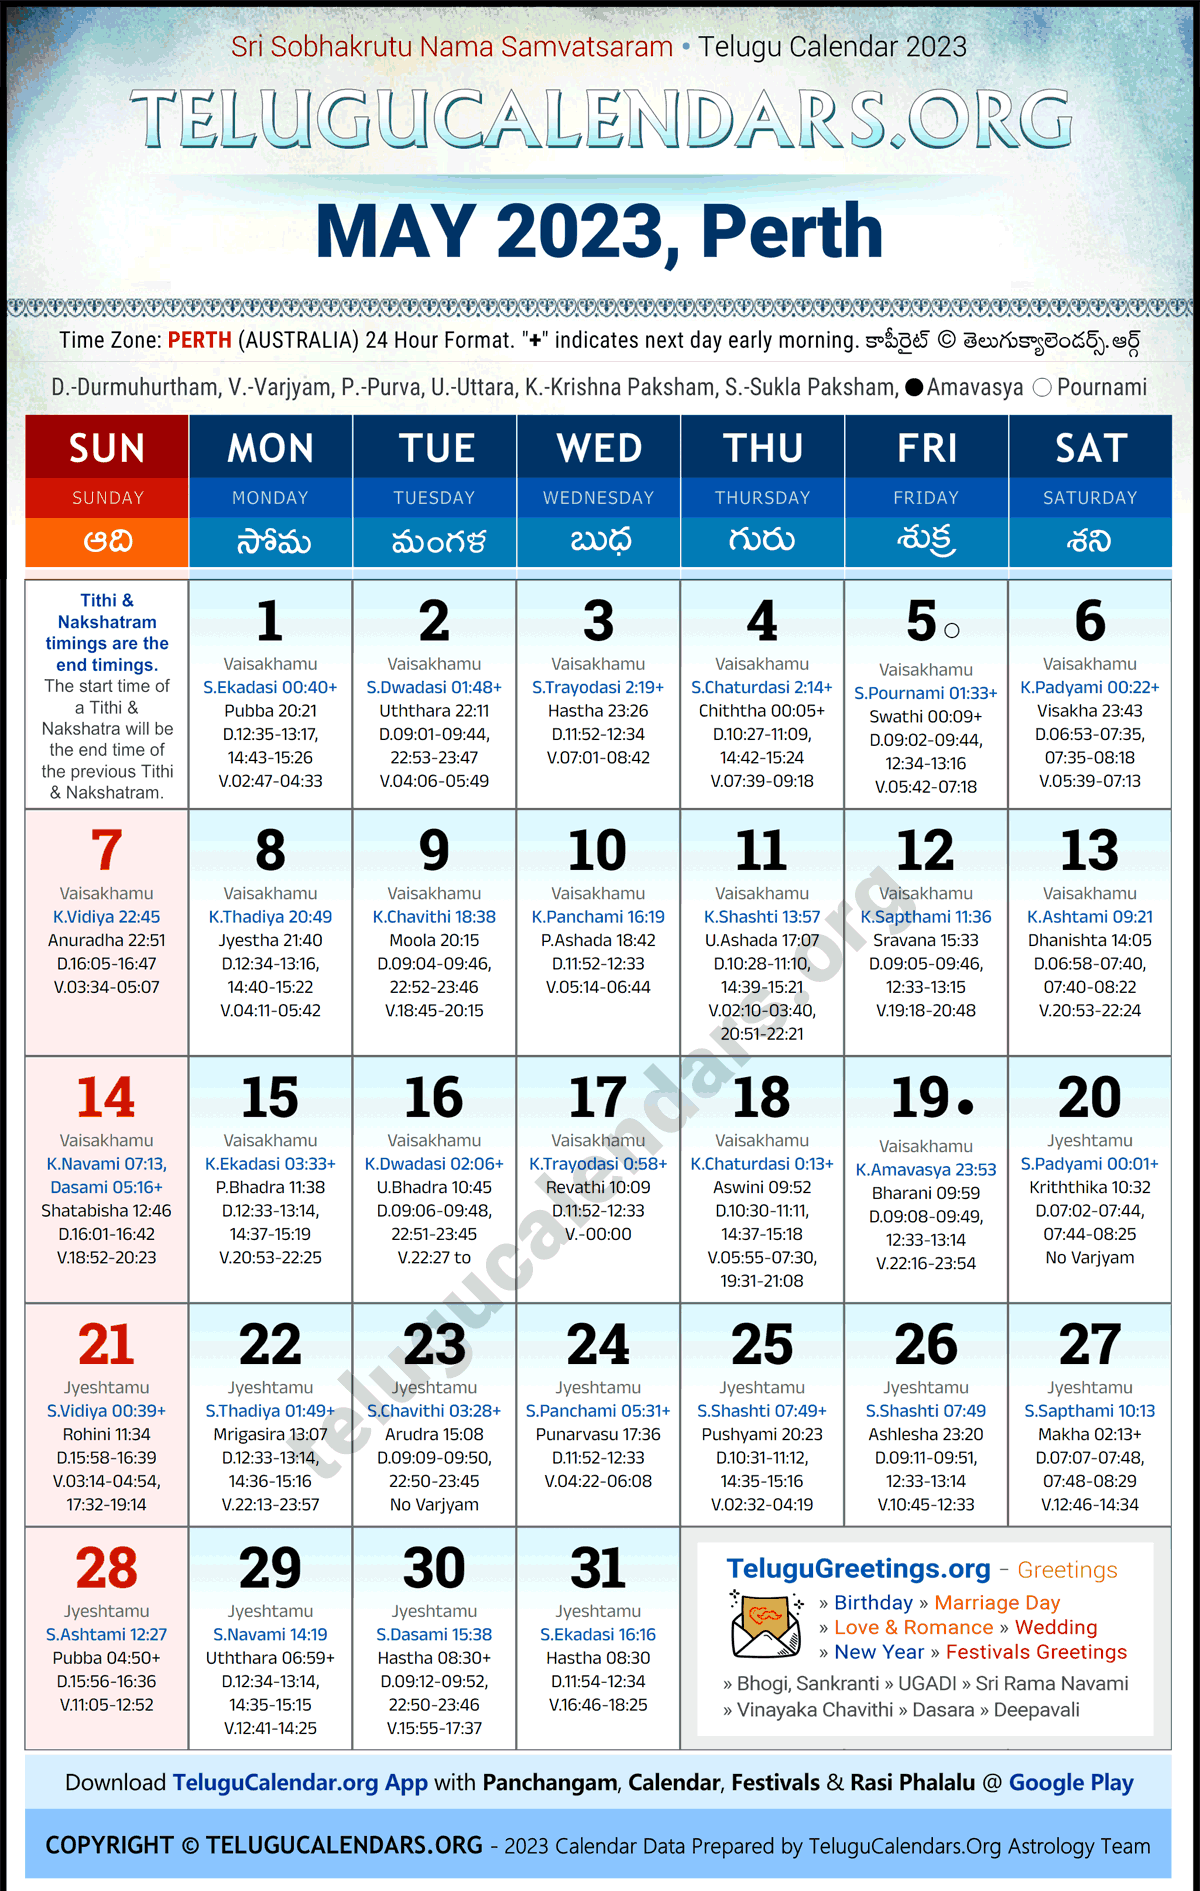 Telugu Calendar 2023 May Festivals for Perth